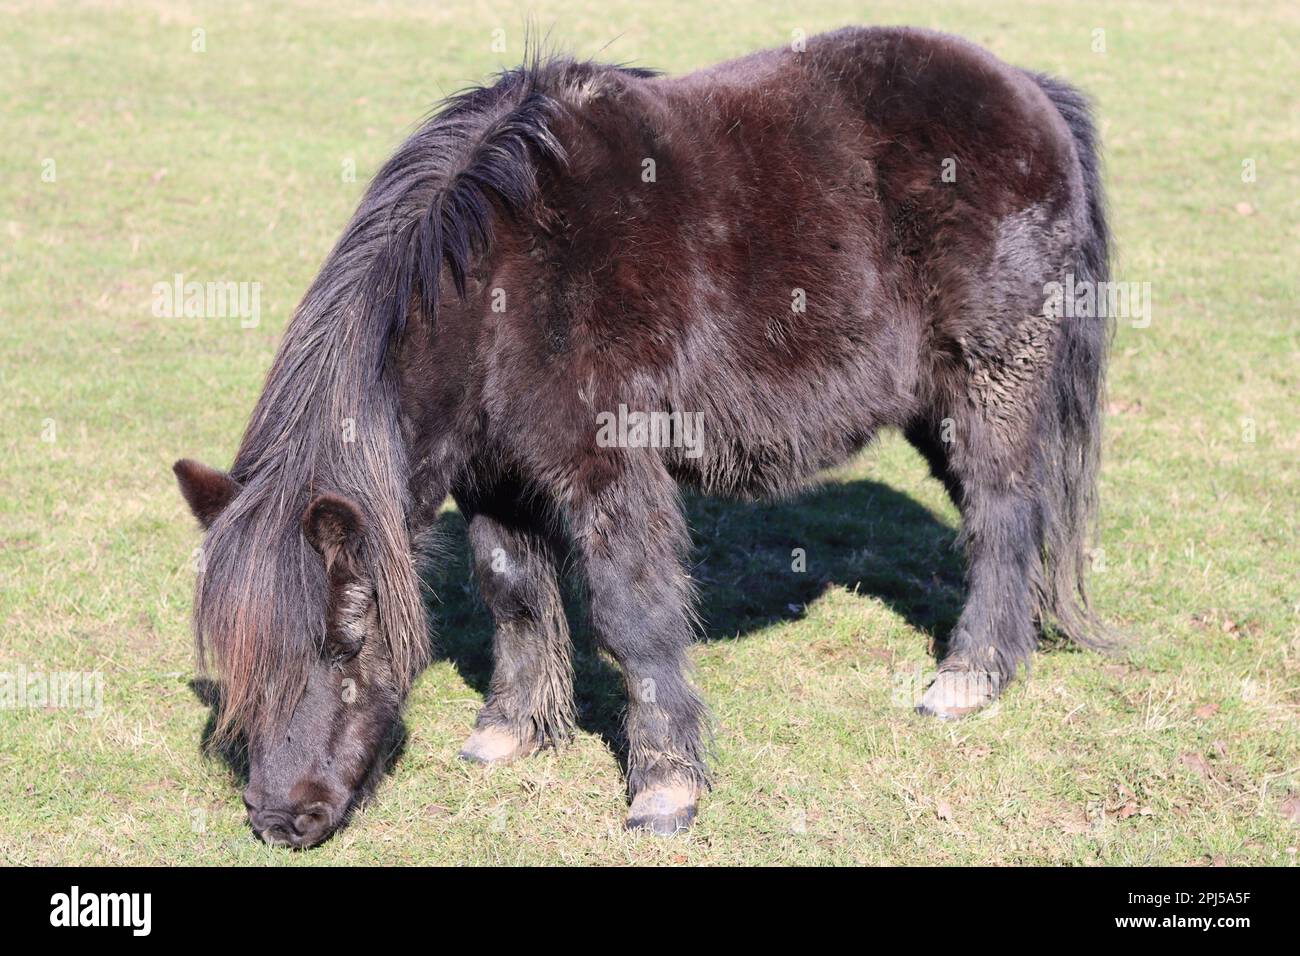 Shetland pony grazing peacefully in spring sunshine in a grassy field Stock Photo